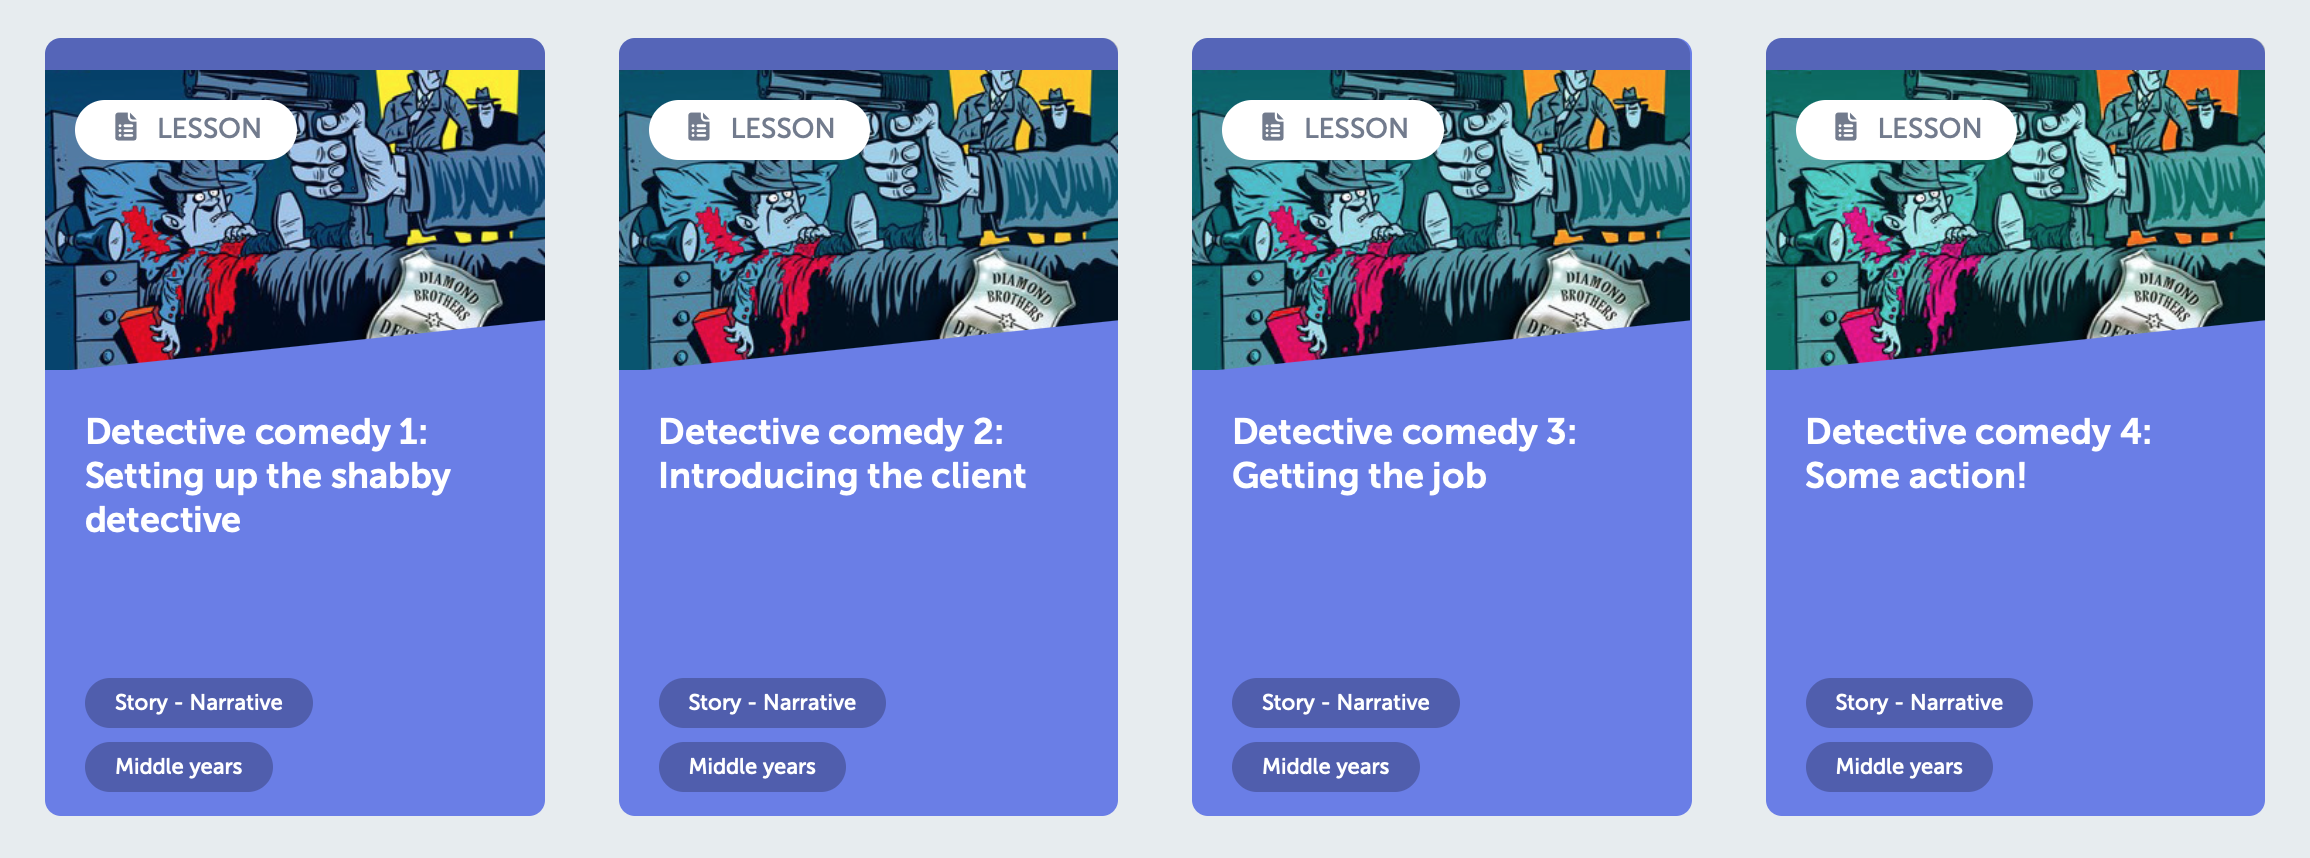 Detective comedy thumbnails